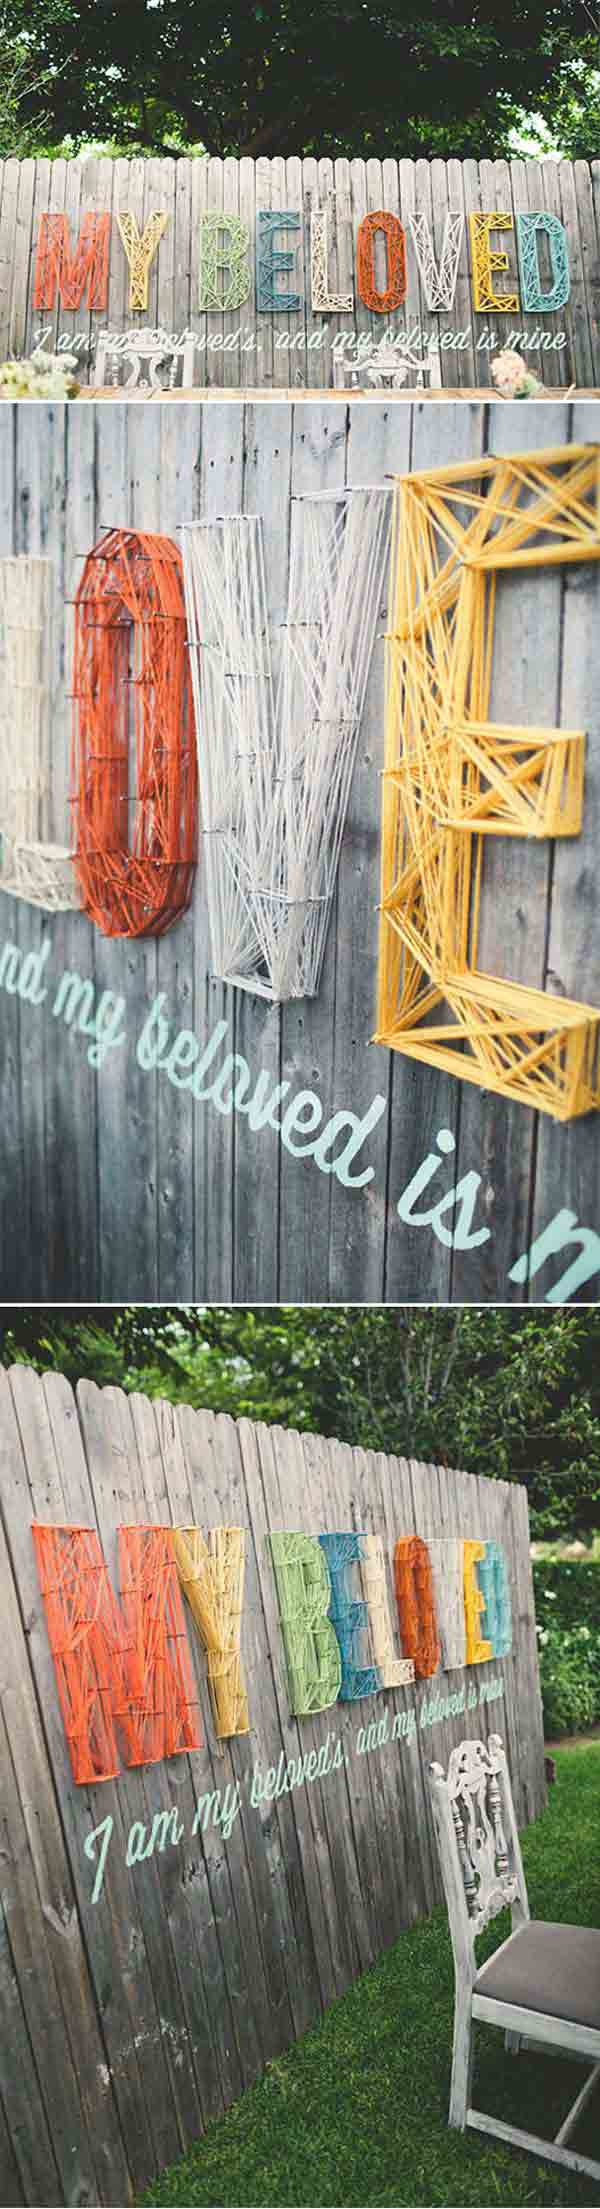 DIY Outdoor Wall Decor
 Top 23 Surprising DIY Ideas To Decorate Your Garden Fence